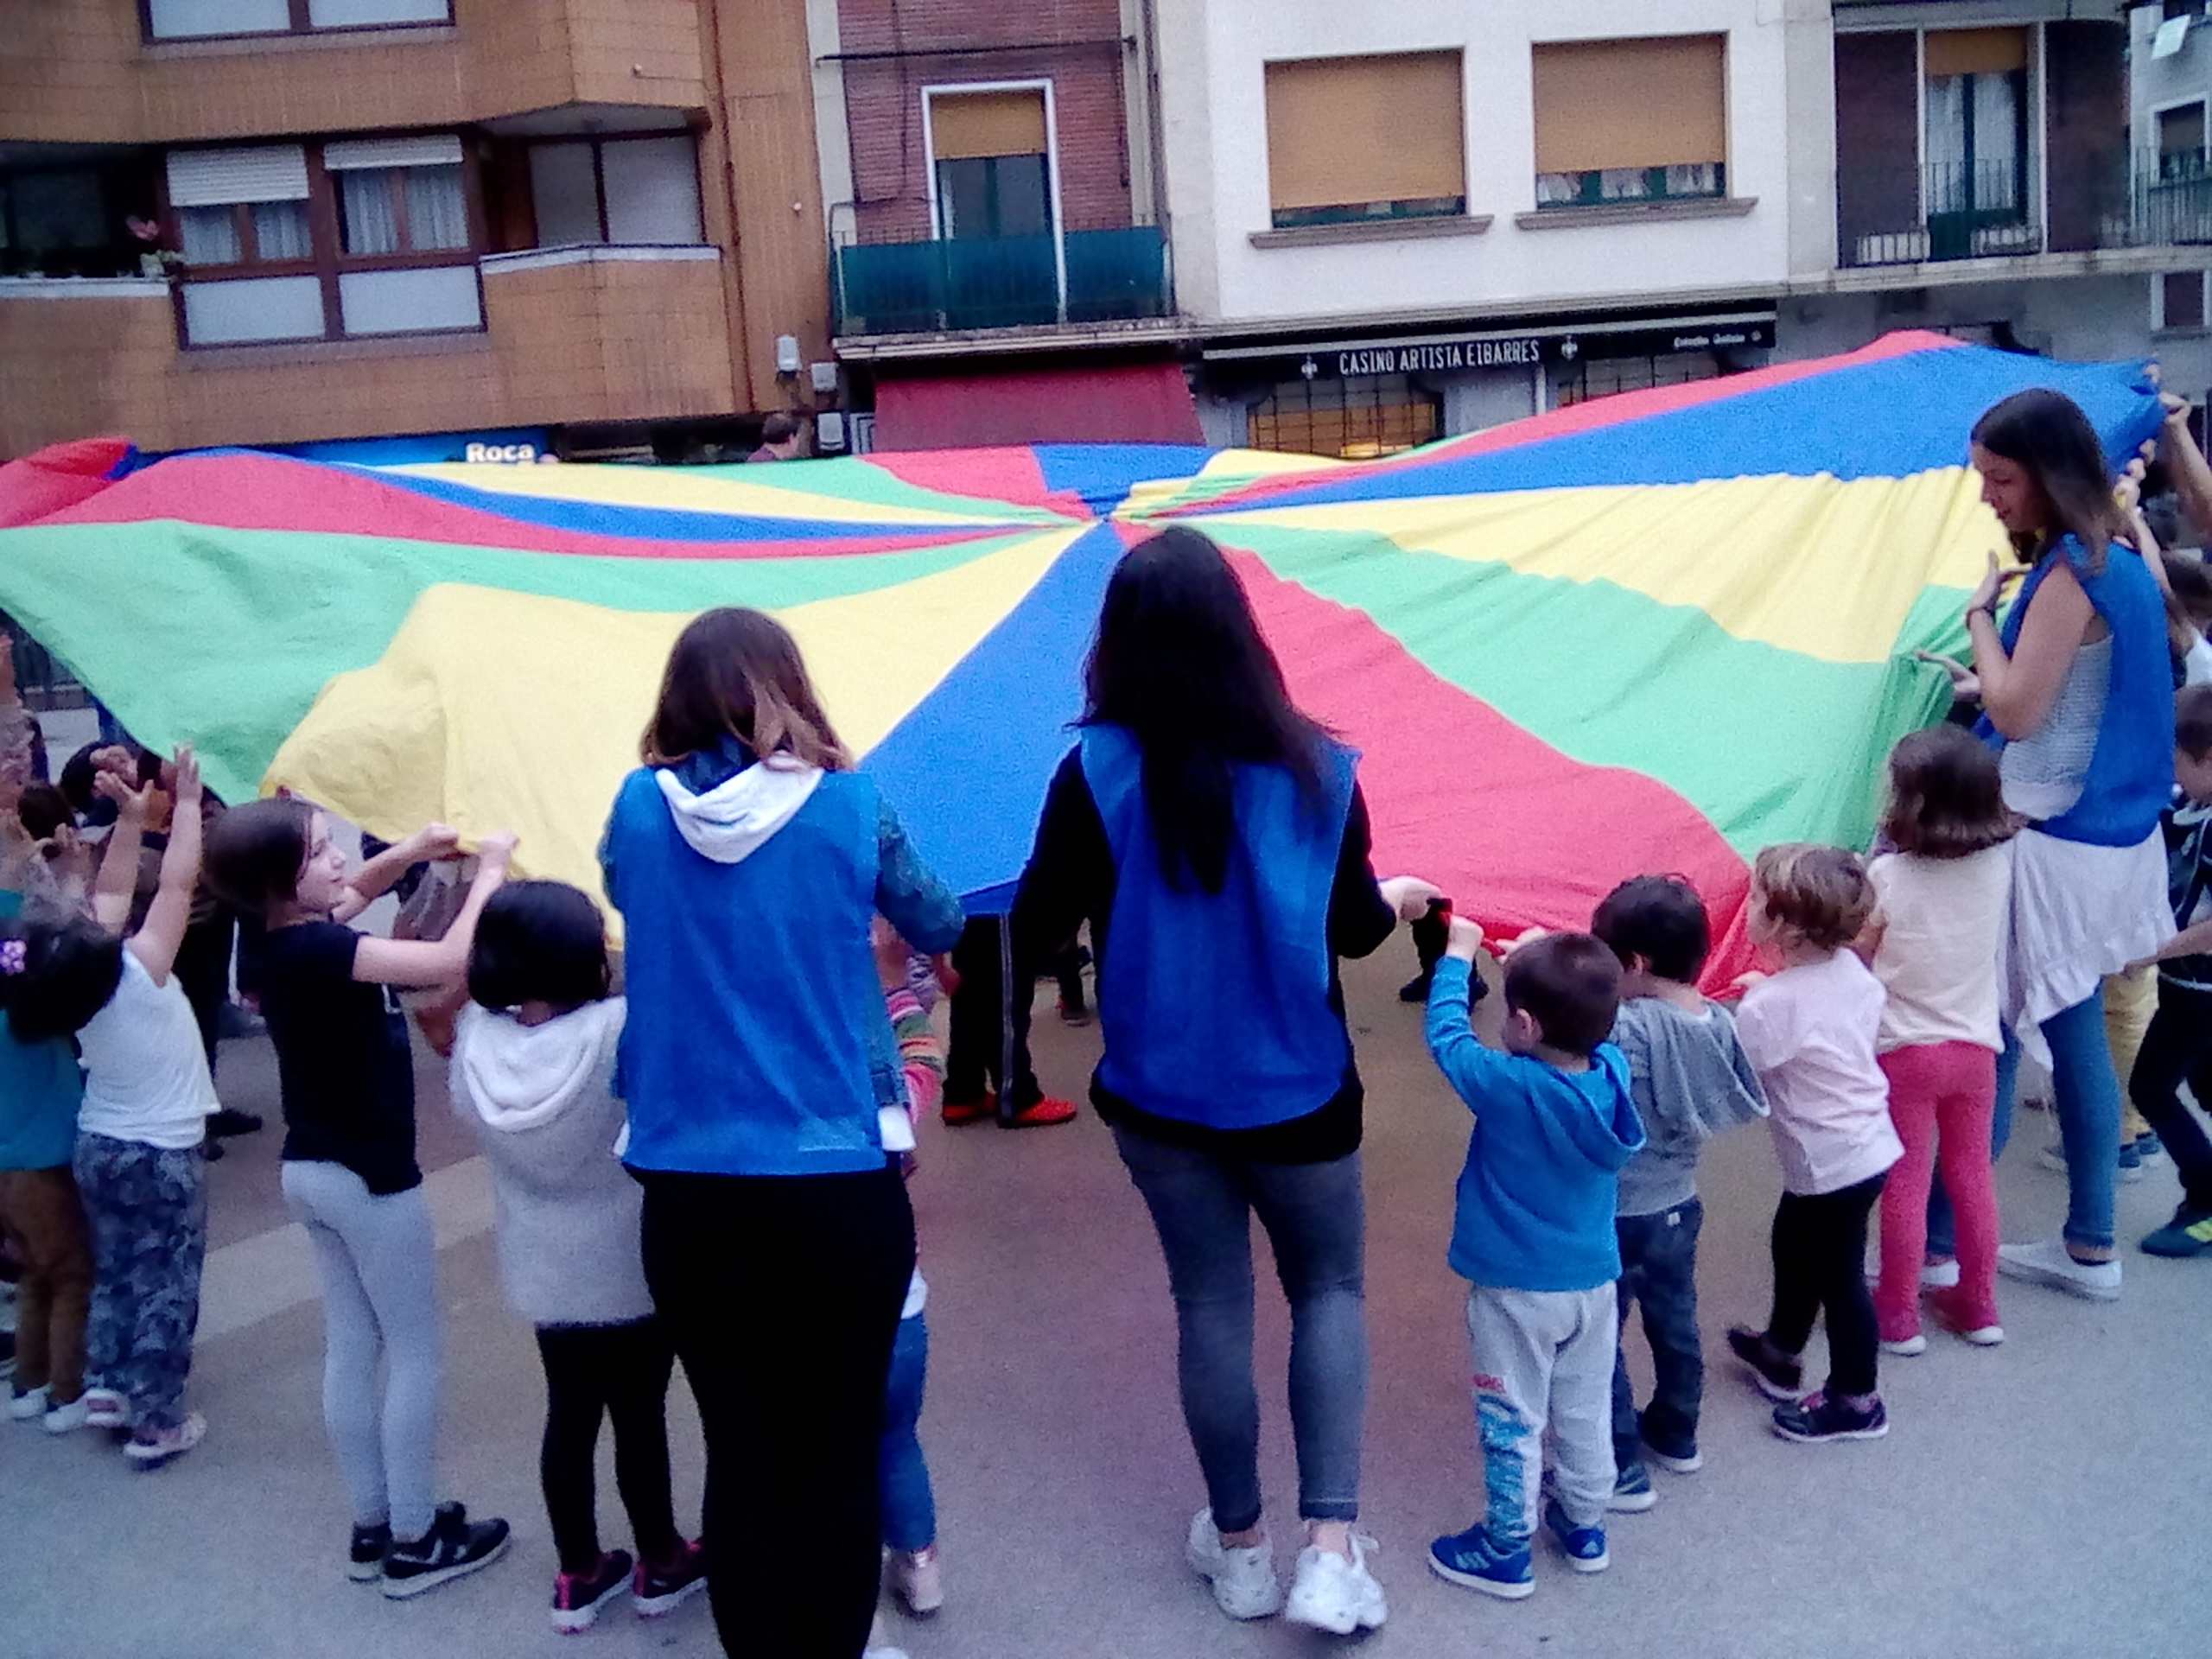 "Kalian Jolasian" juegos para familias en Bizikleta plaza